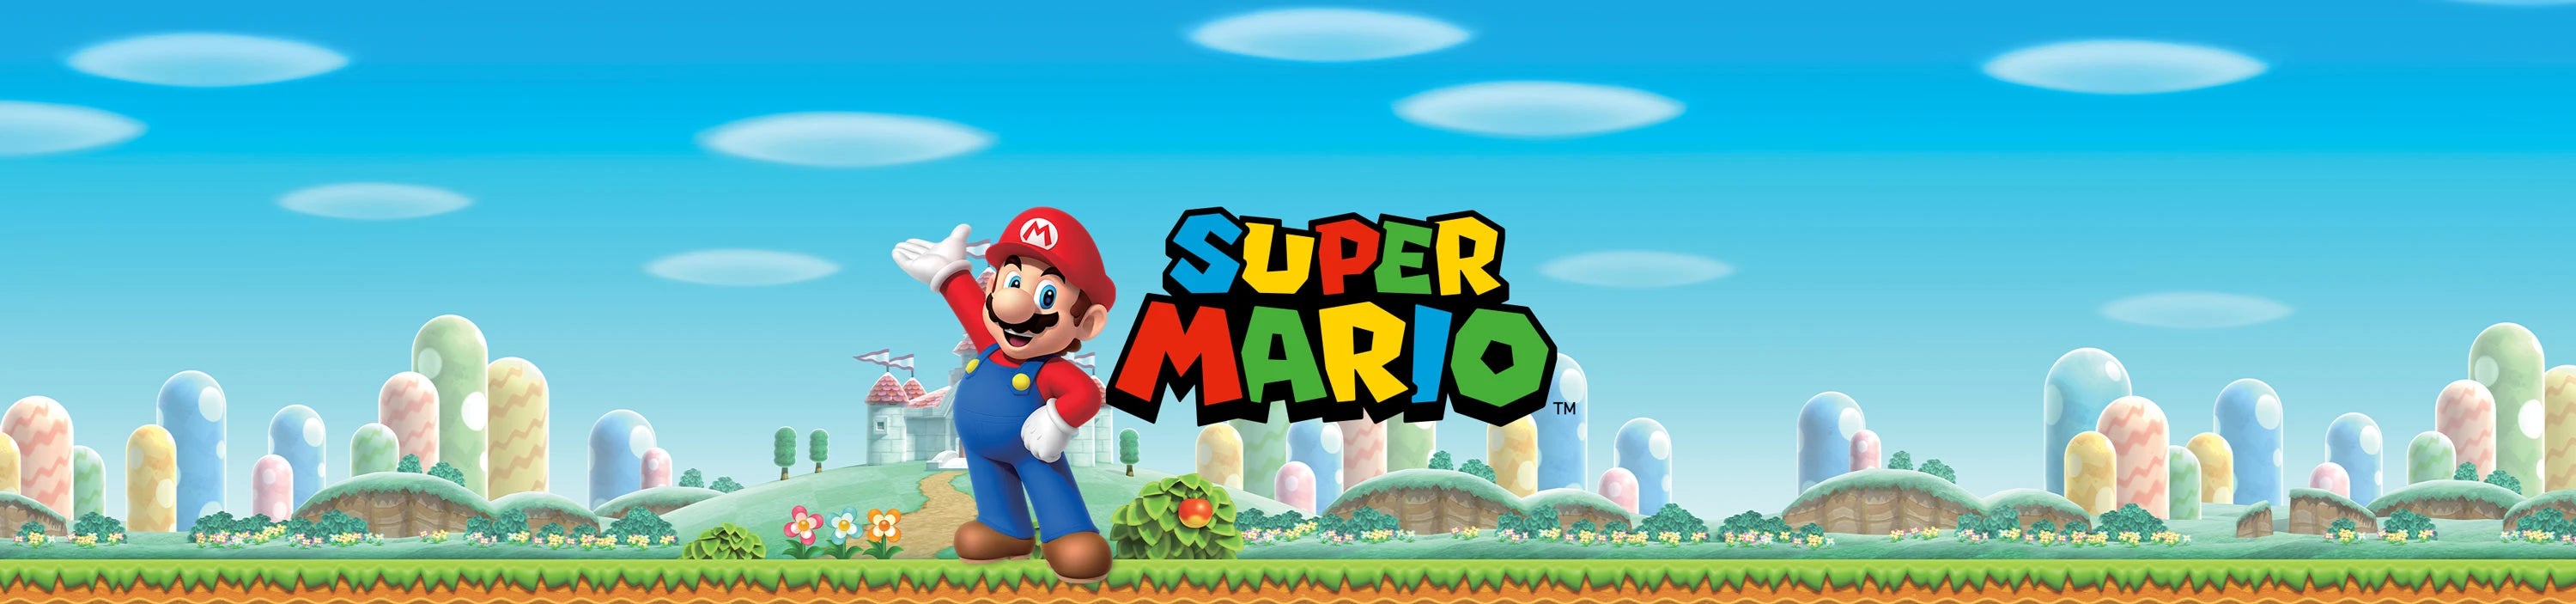 Astucci Super Mario